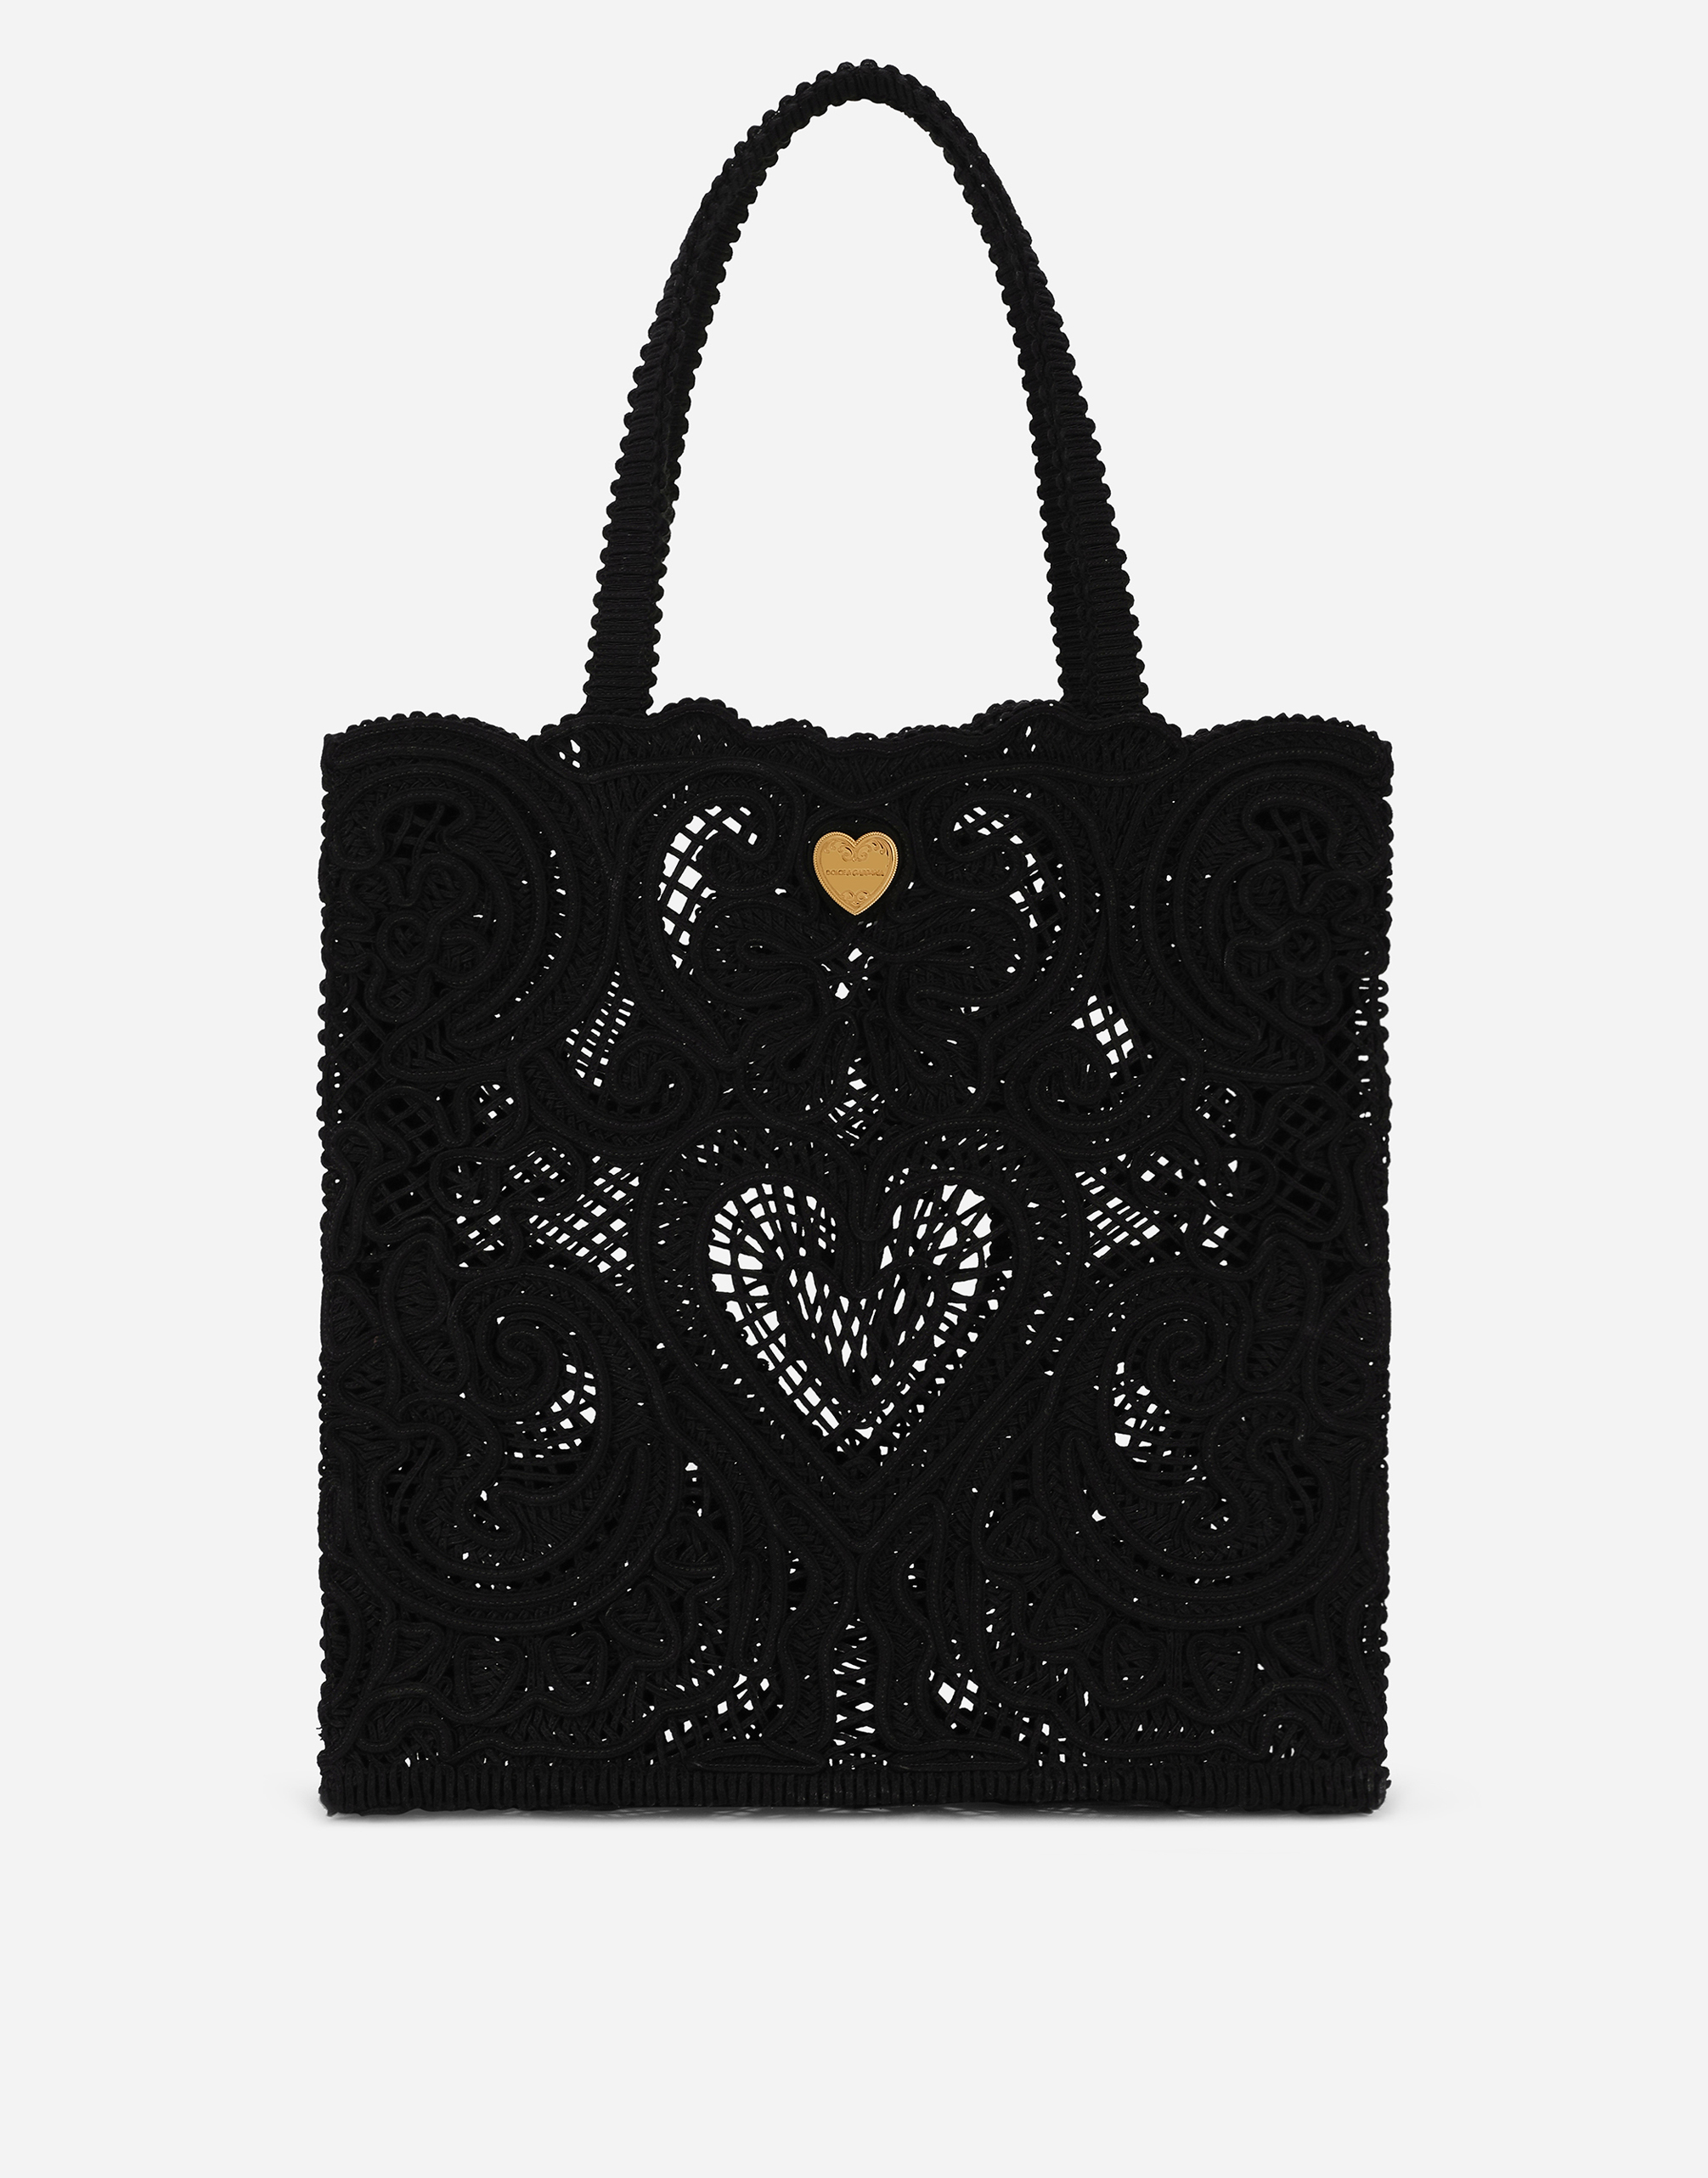 Medium shopper with cordonetto embroidery in Black